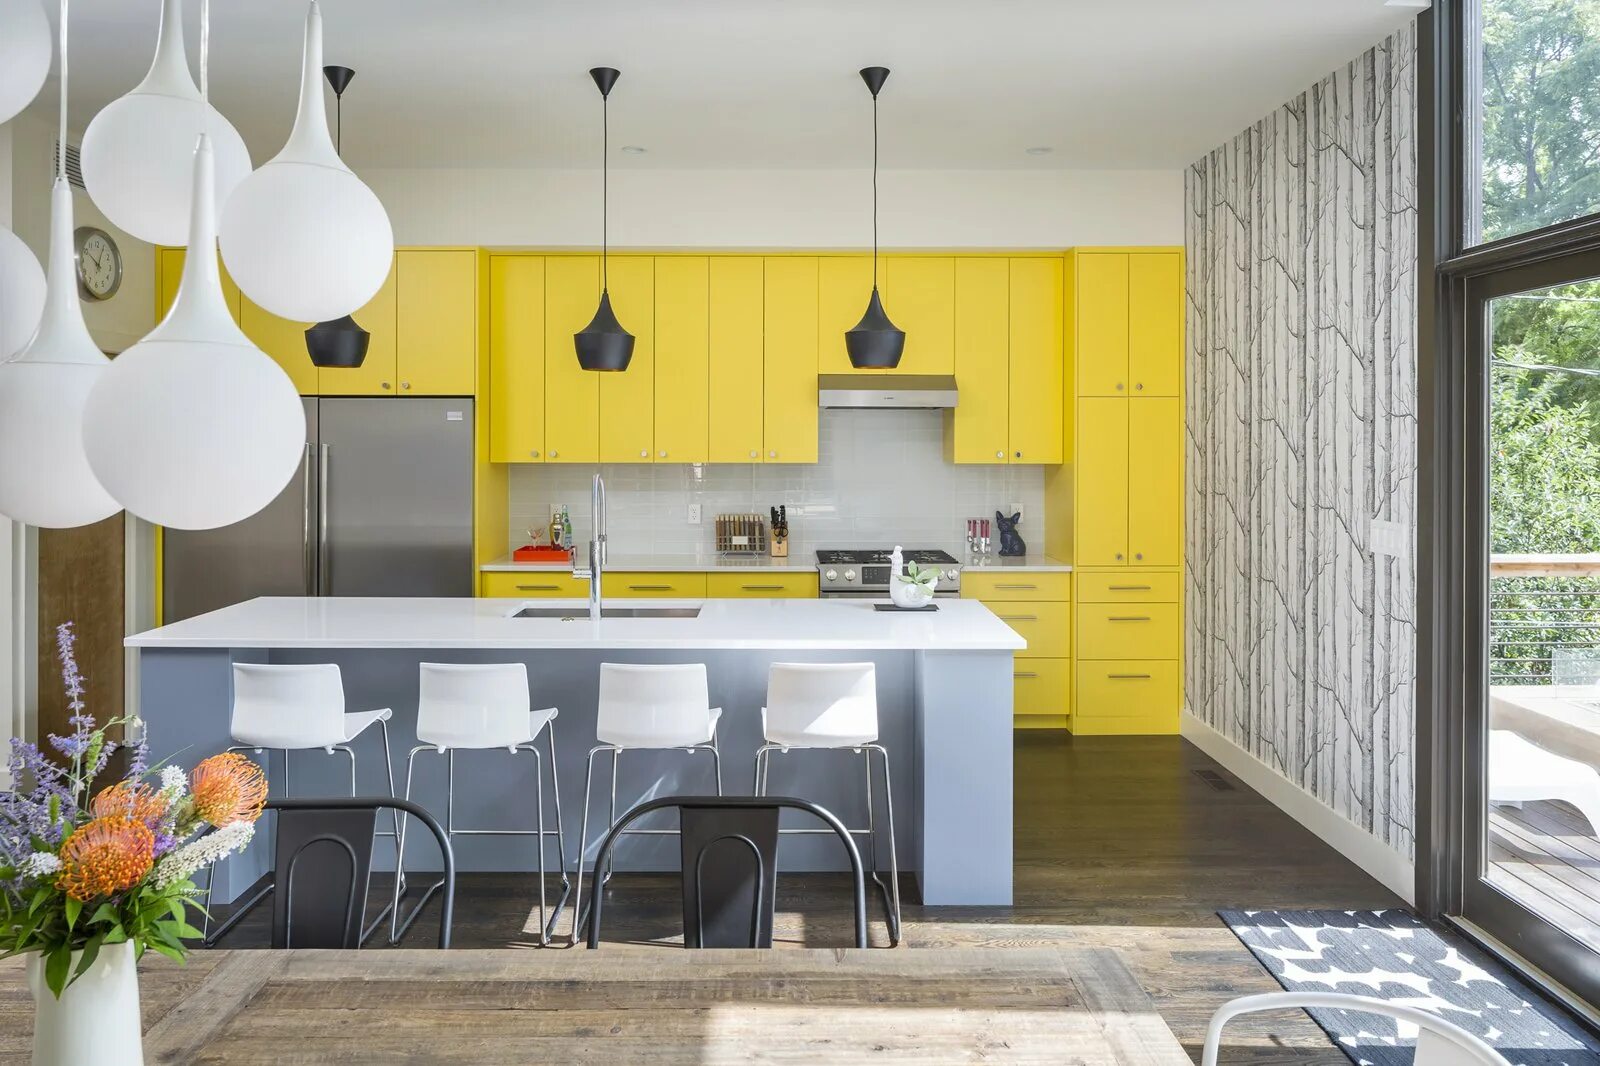 Бело желтая кухня. Желто серая кухня. Кухня в ярких тонах. Кухня с желтыми акцентами. Желтая кухня в интерьере.